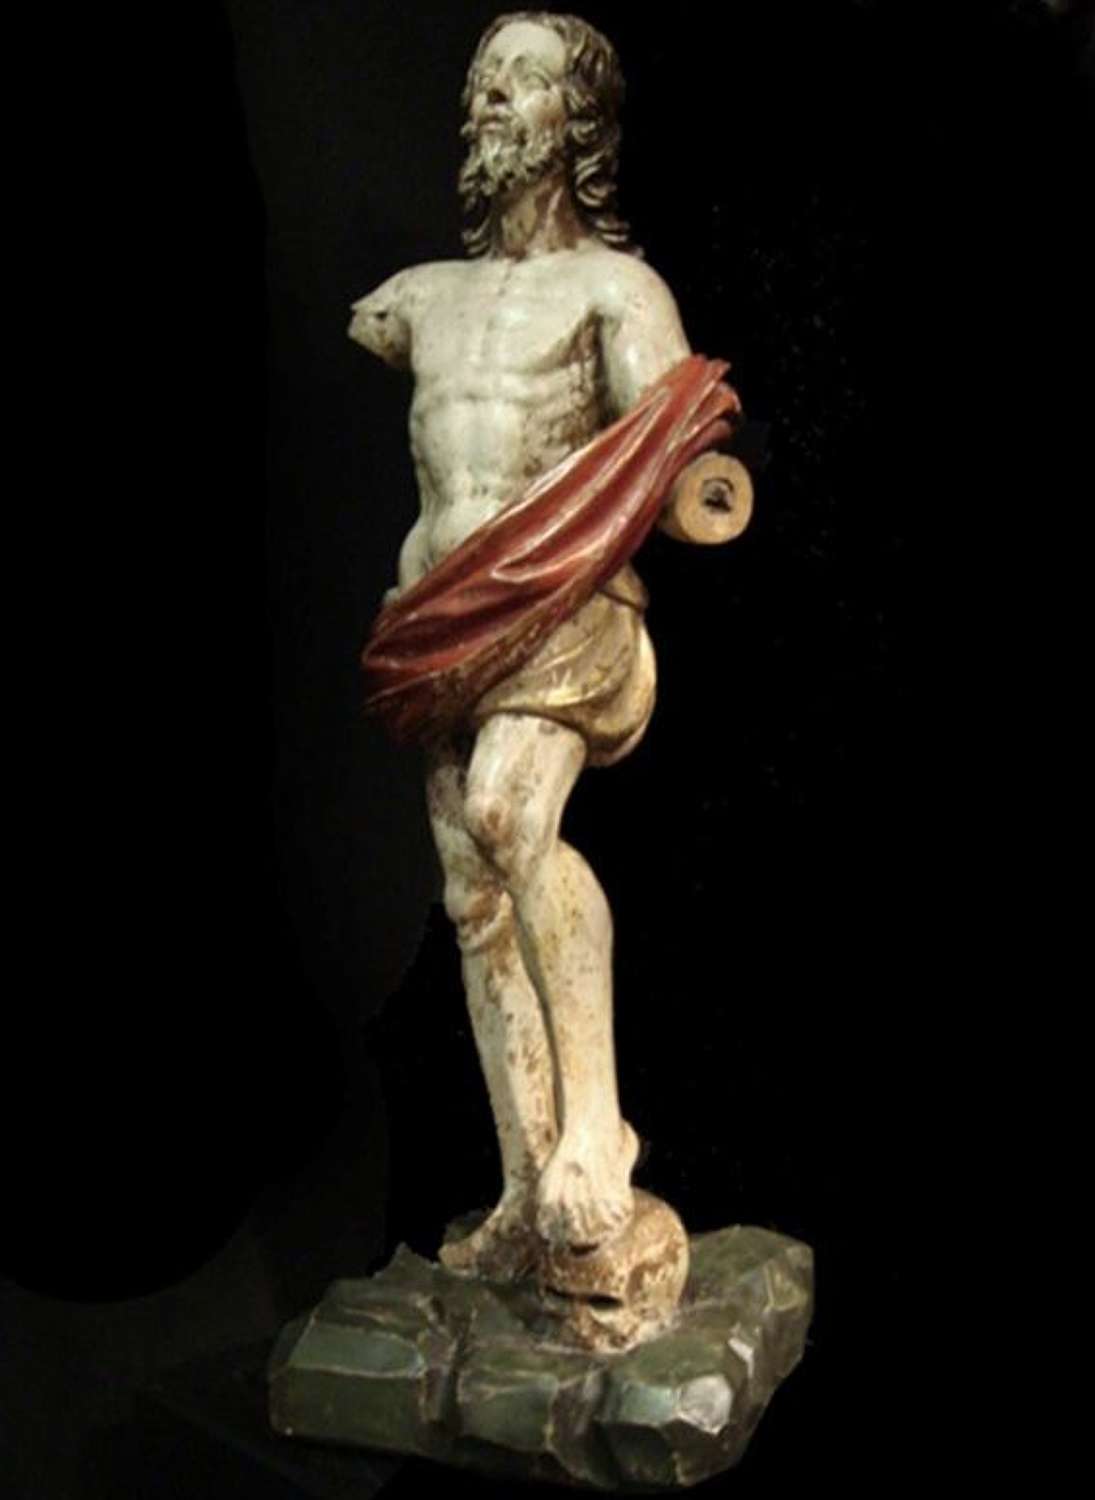 A Spanish polychrome figure of the resurrection